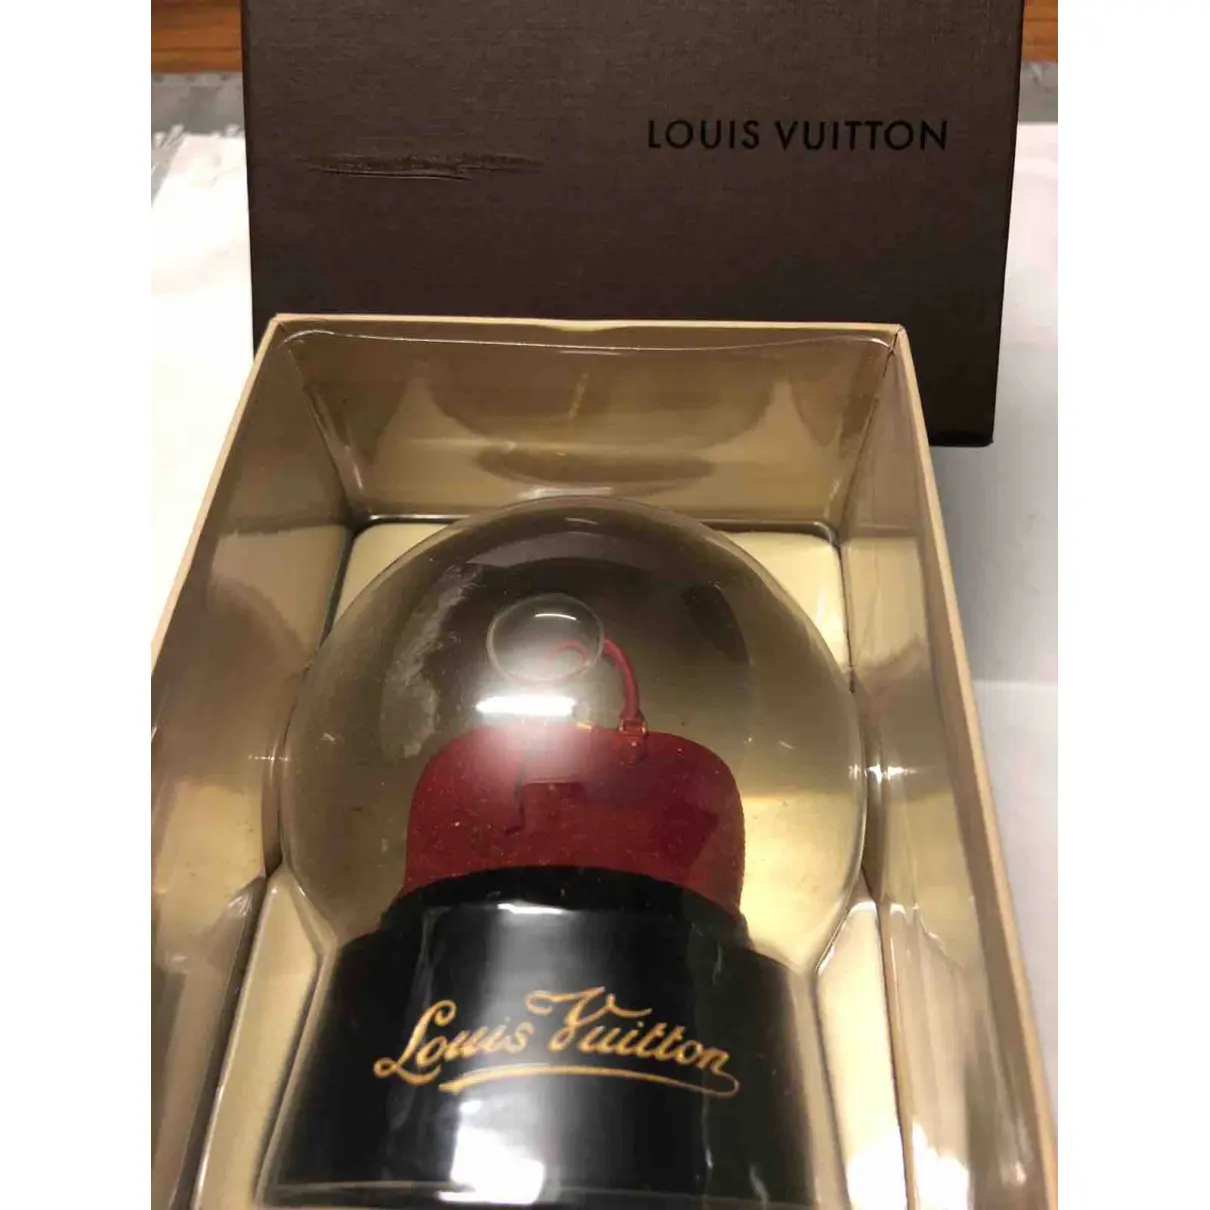 Buy Louis Vuitton Snowball online